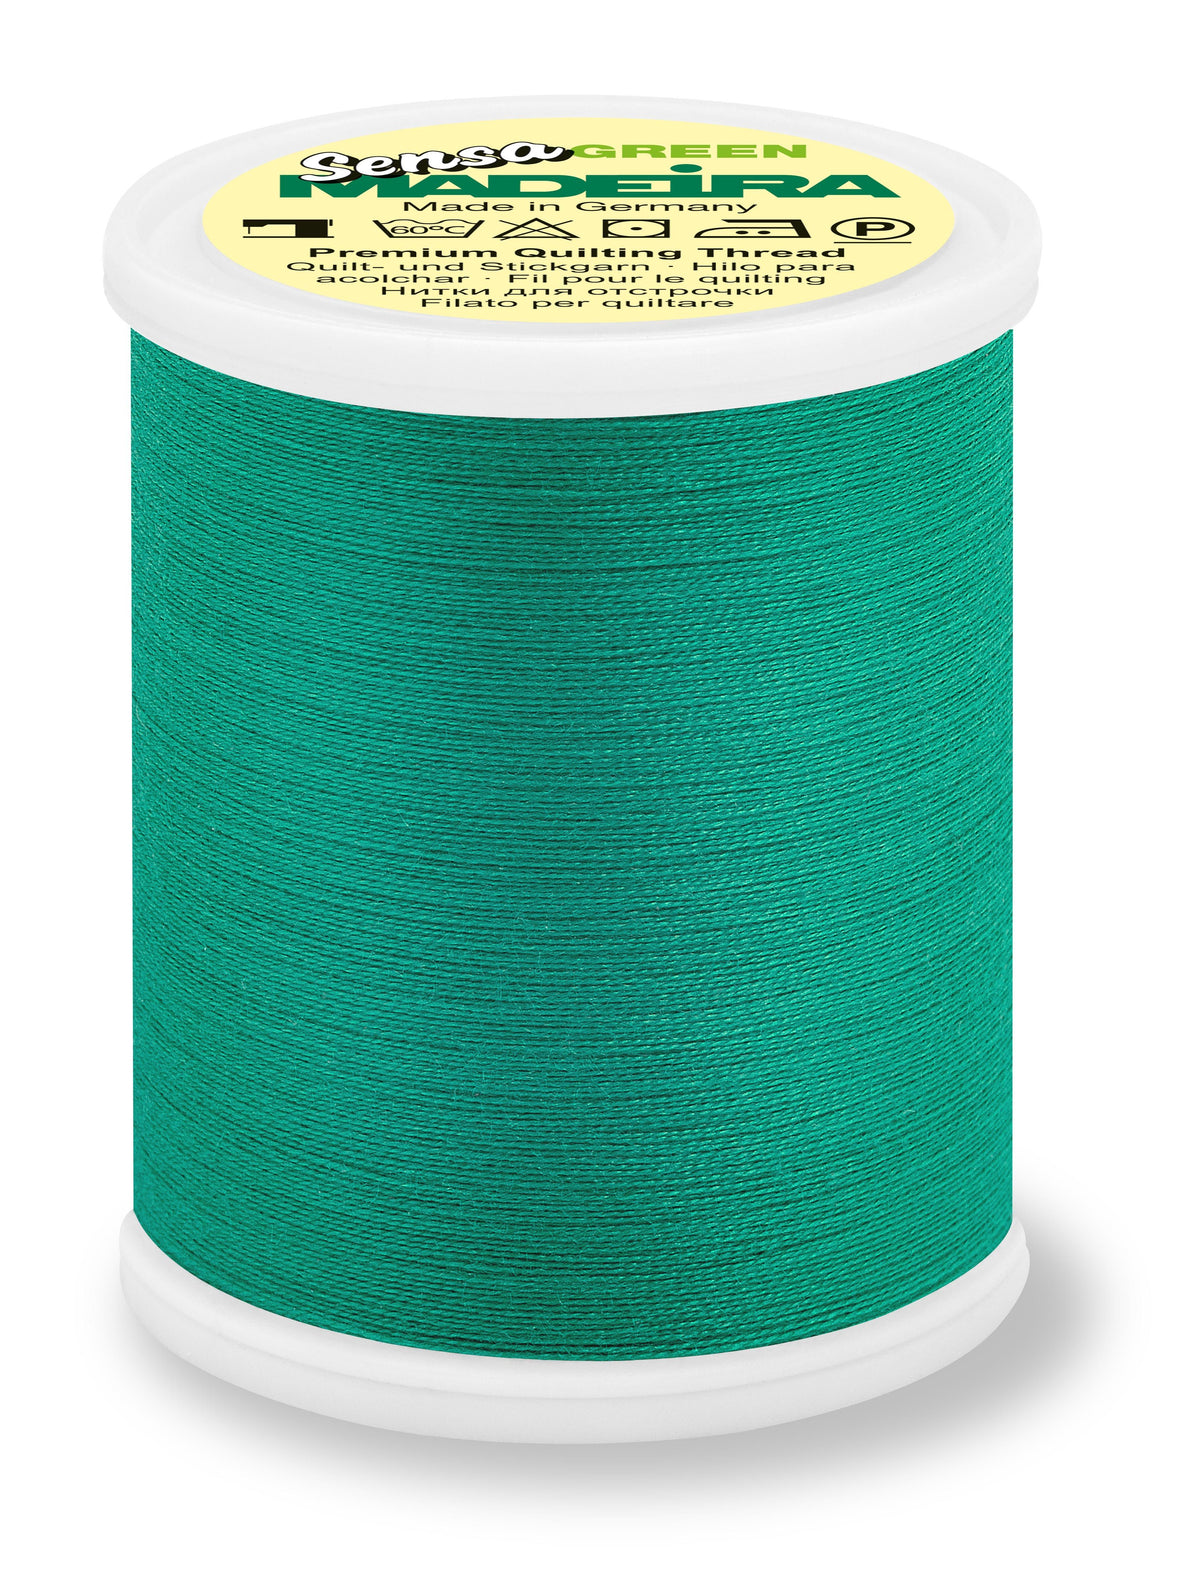 Madeira Sensa Green, Machine Embroidery Thread, 1100 Yards